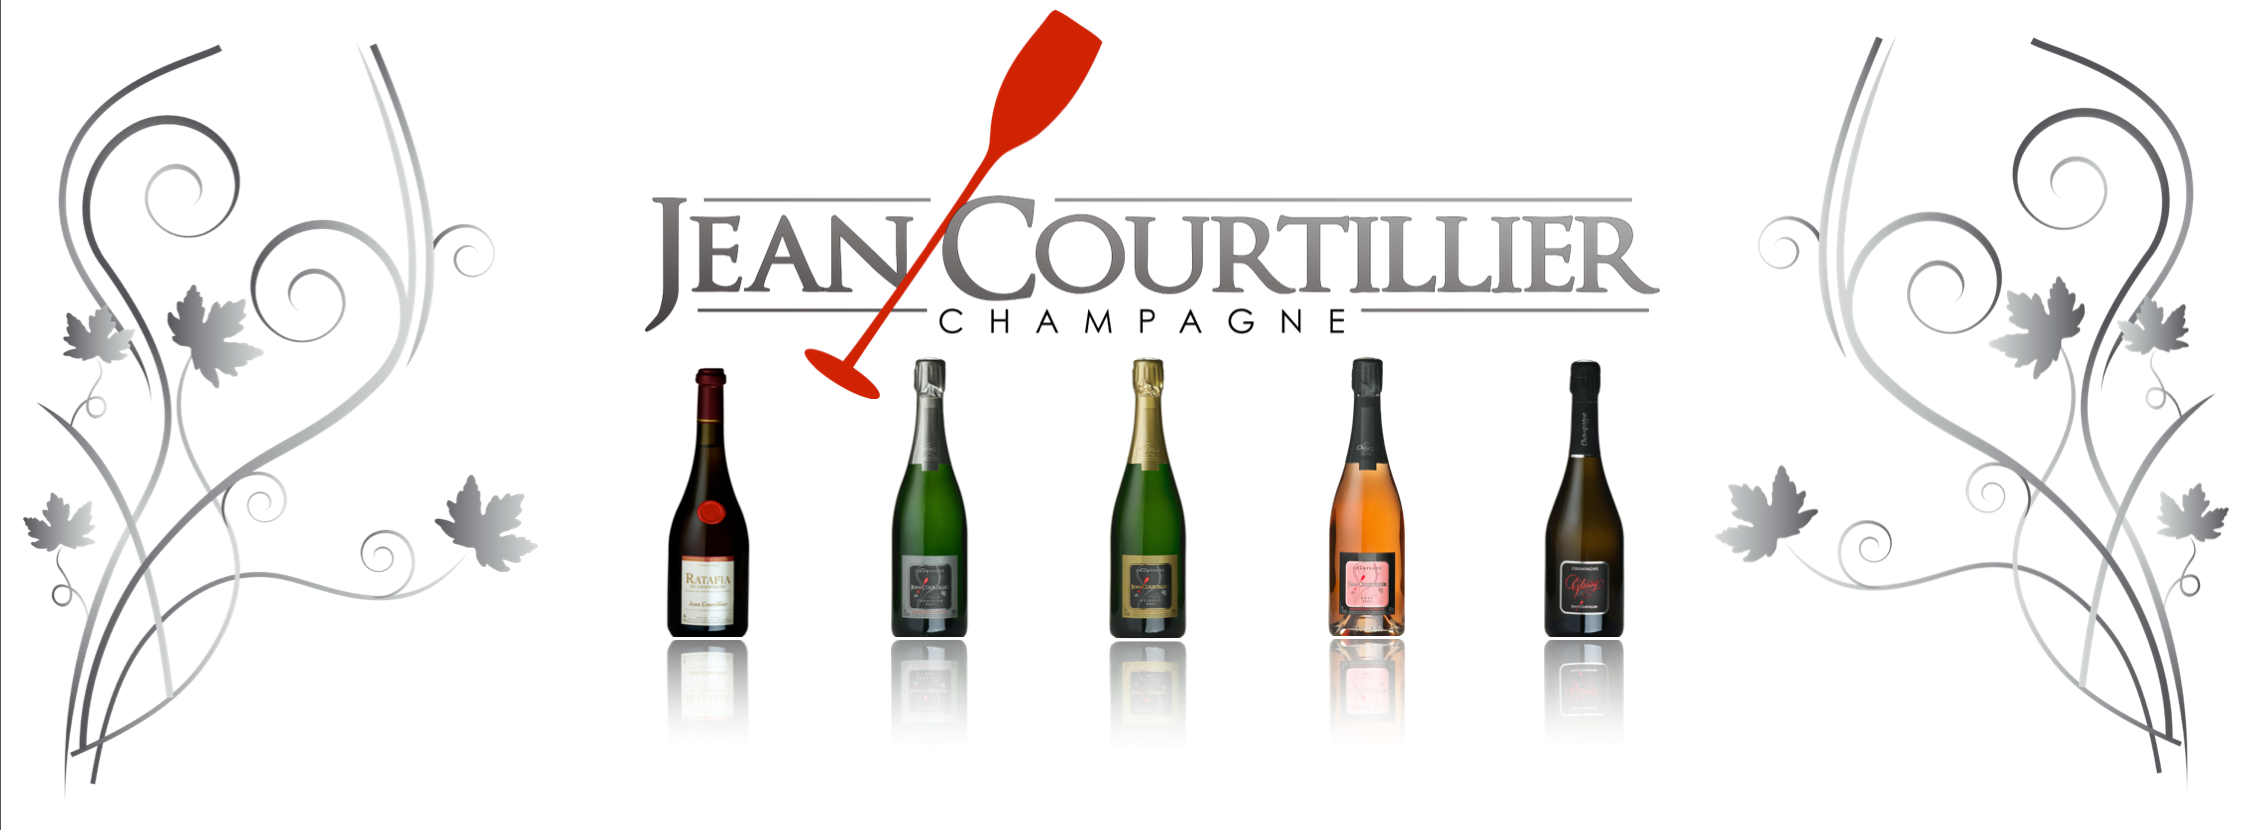 Champagne Jean Courtillier 